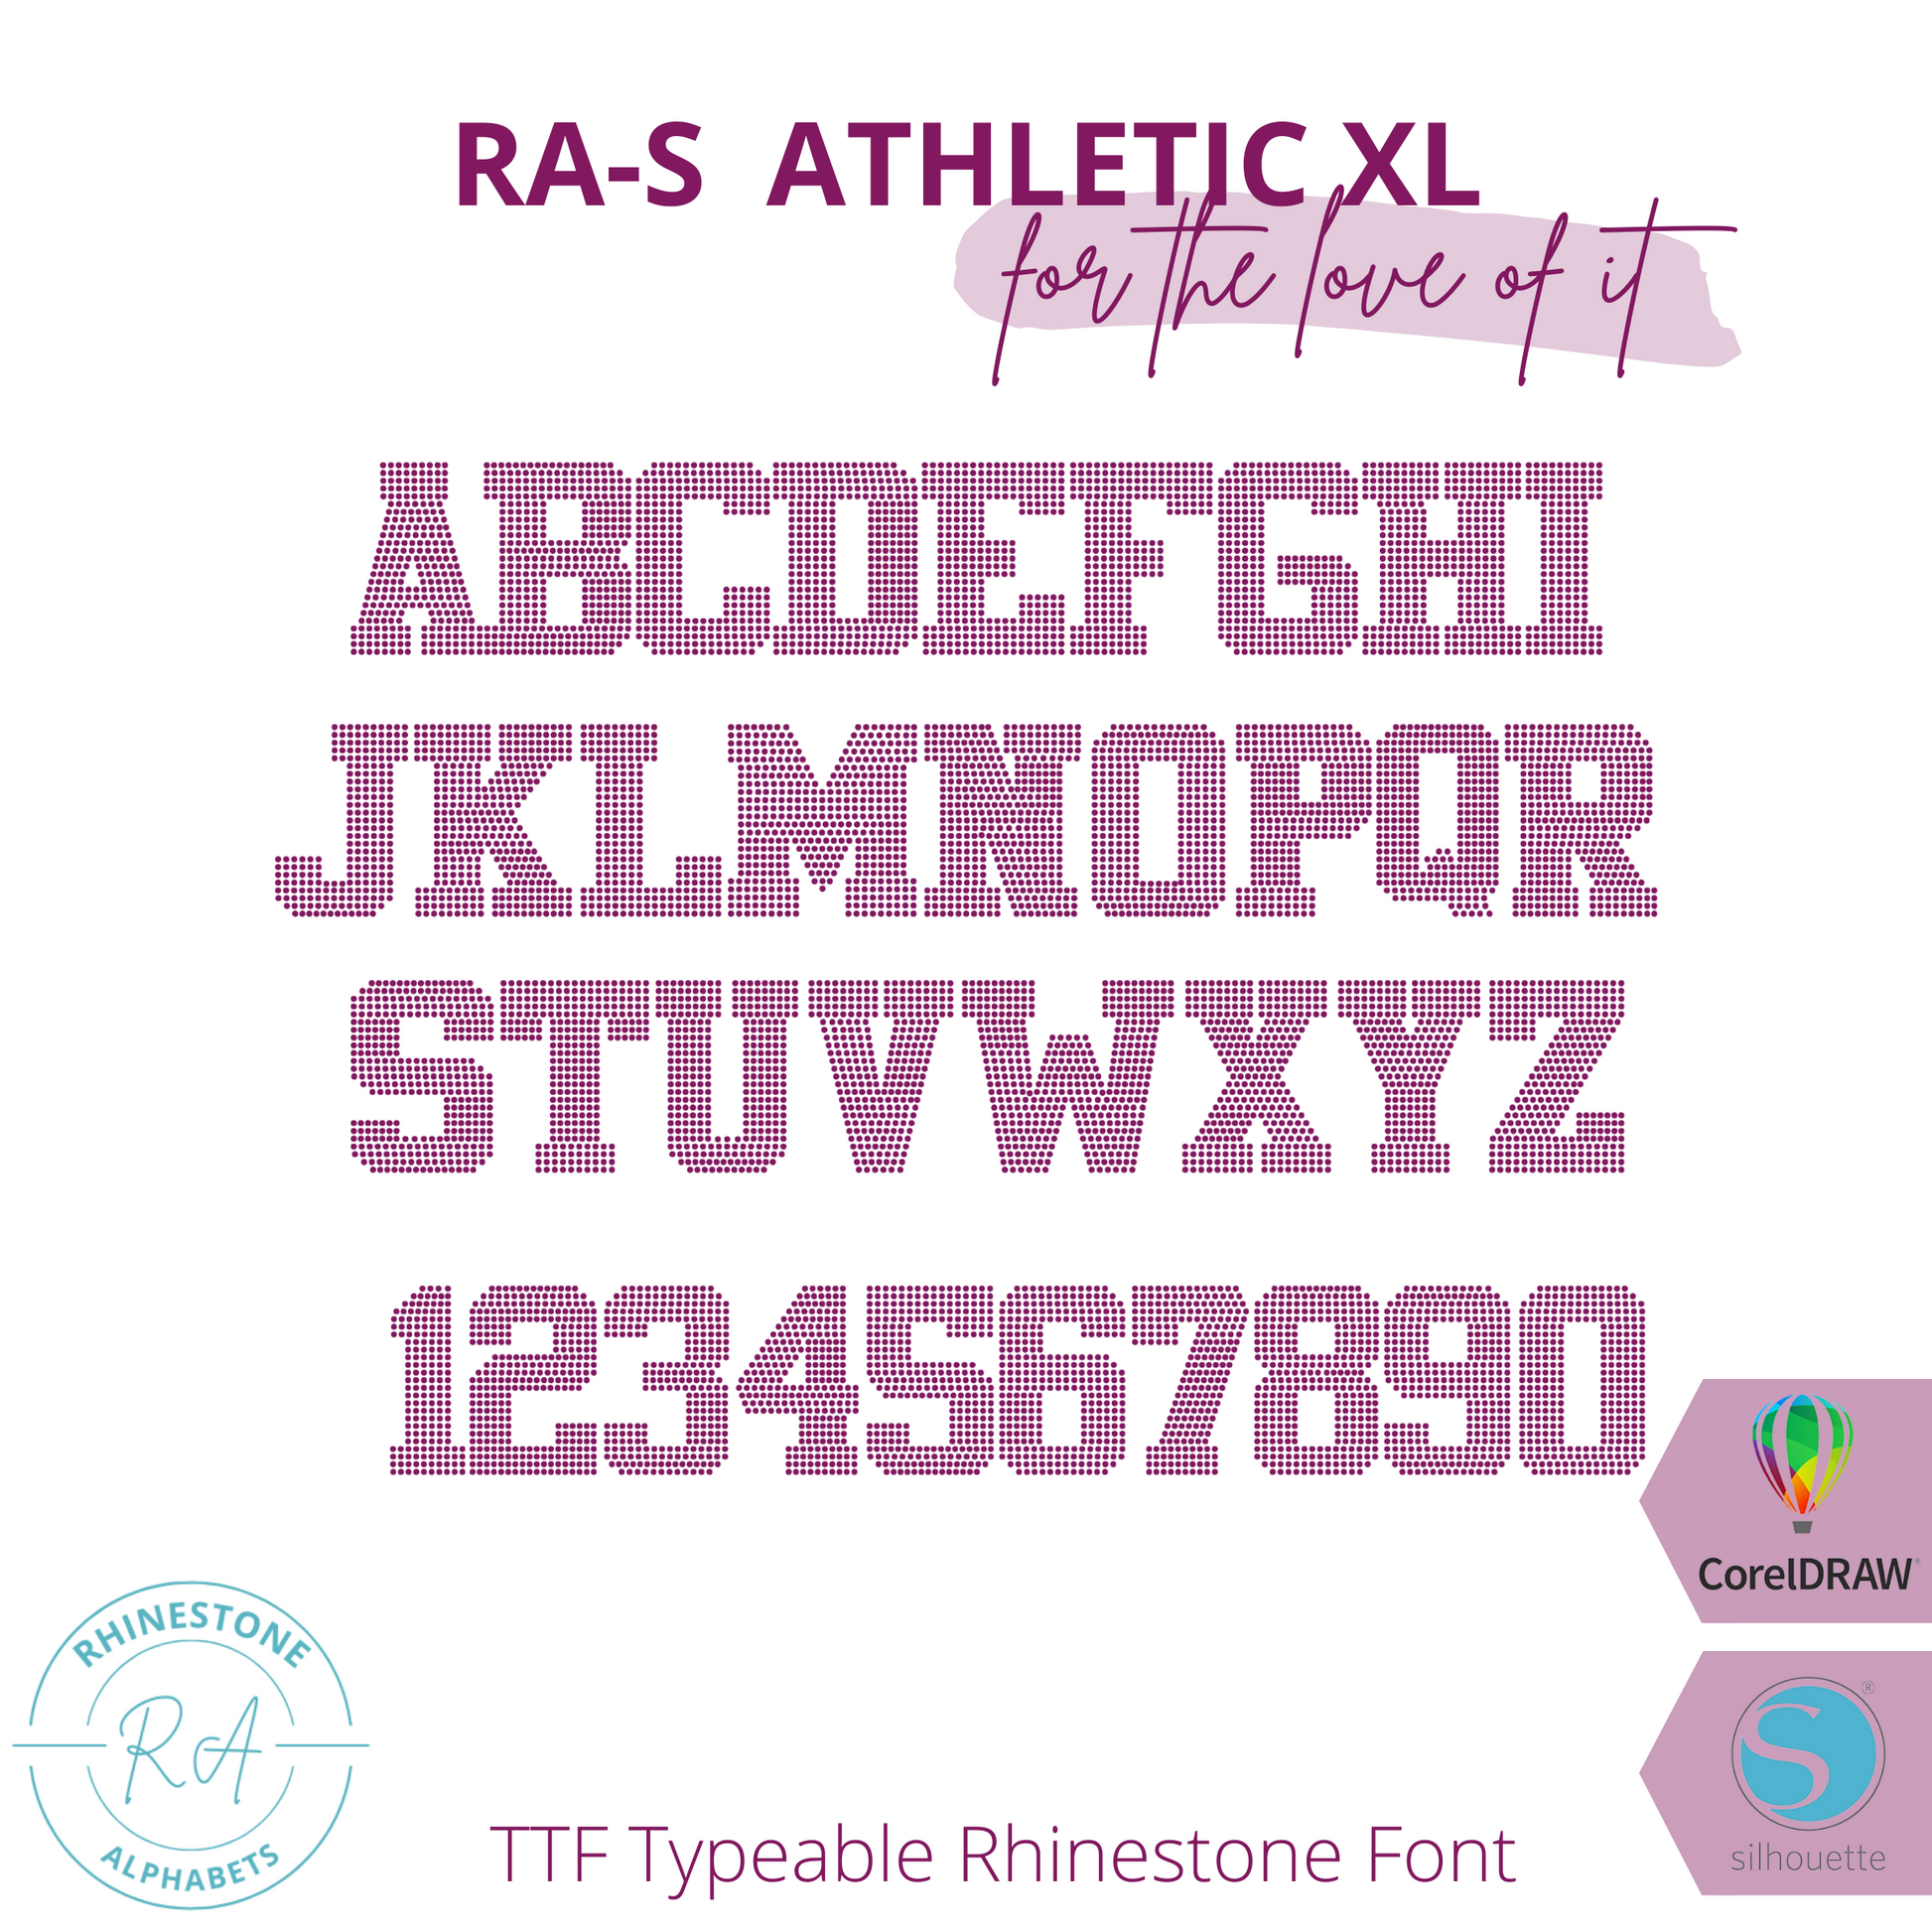 RA-S Athletic XL - RhinestoneAlphabets